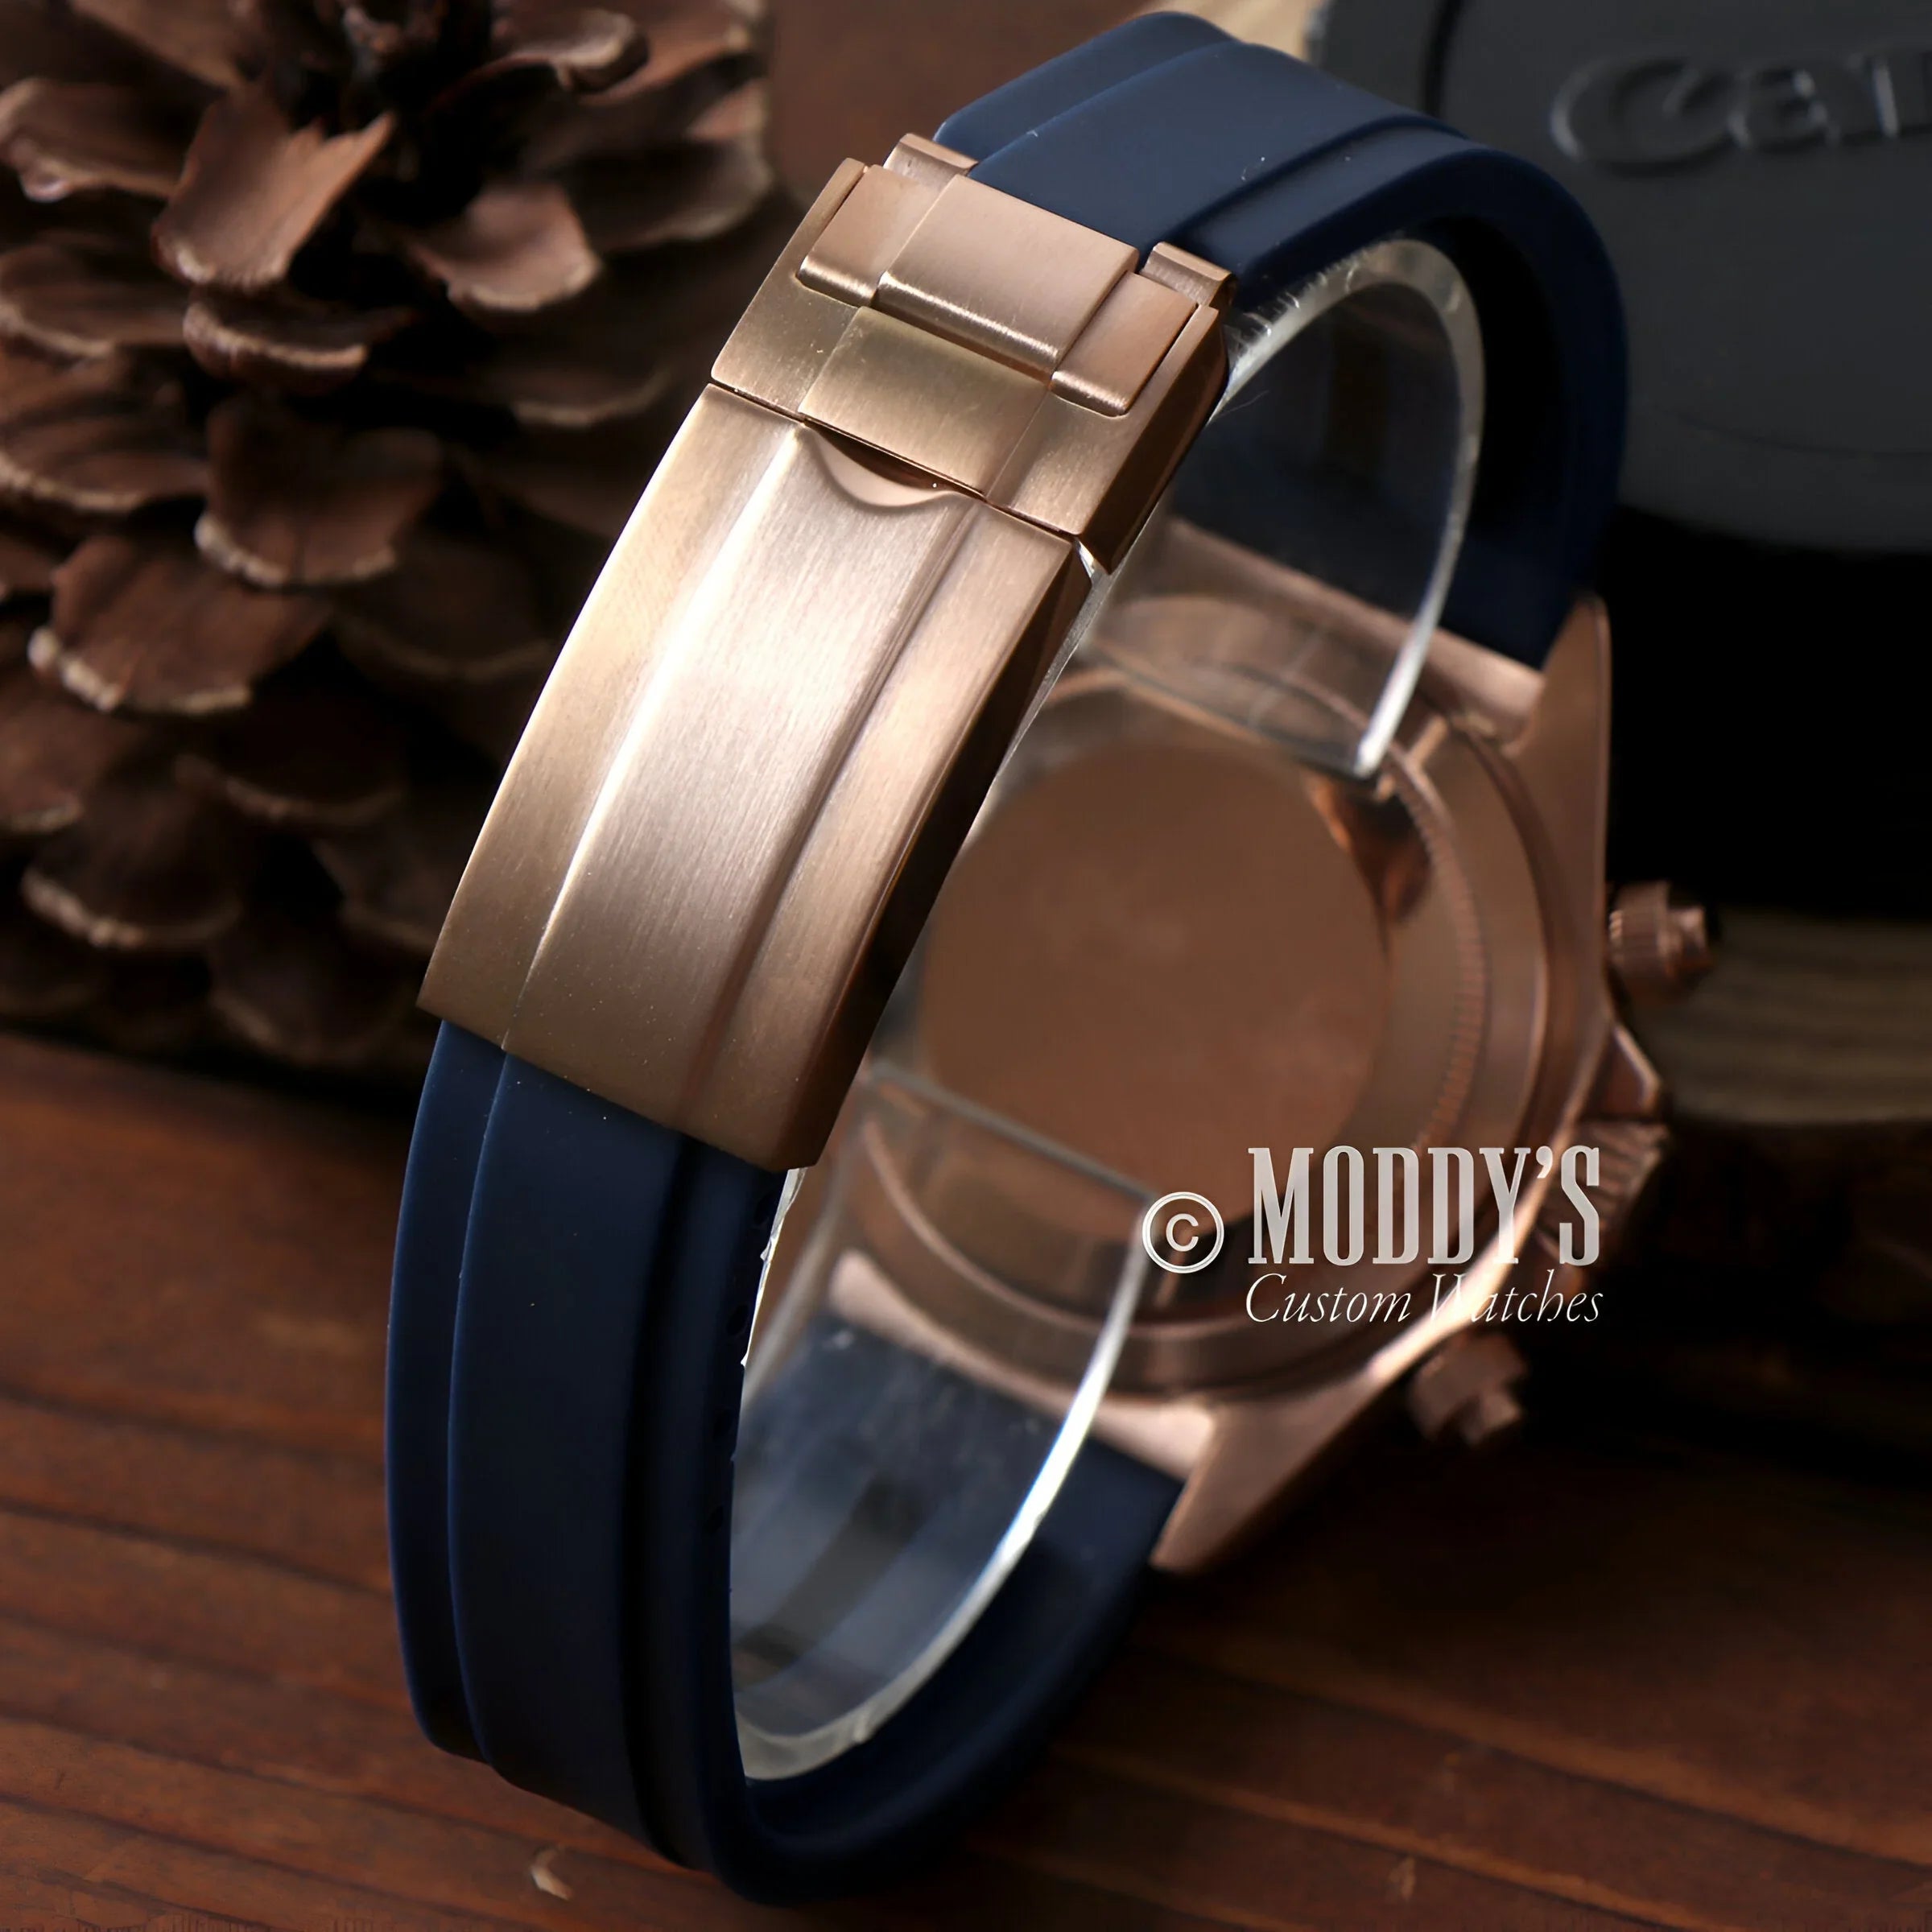 Seiko Mod Daytona: Seitona Royal Blue Watch With Blue Band & Gold Case - Elegant Design